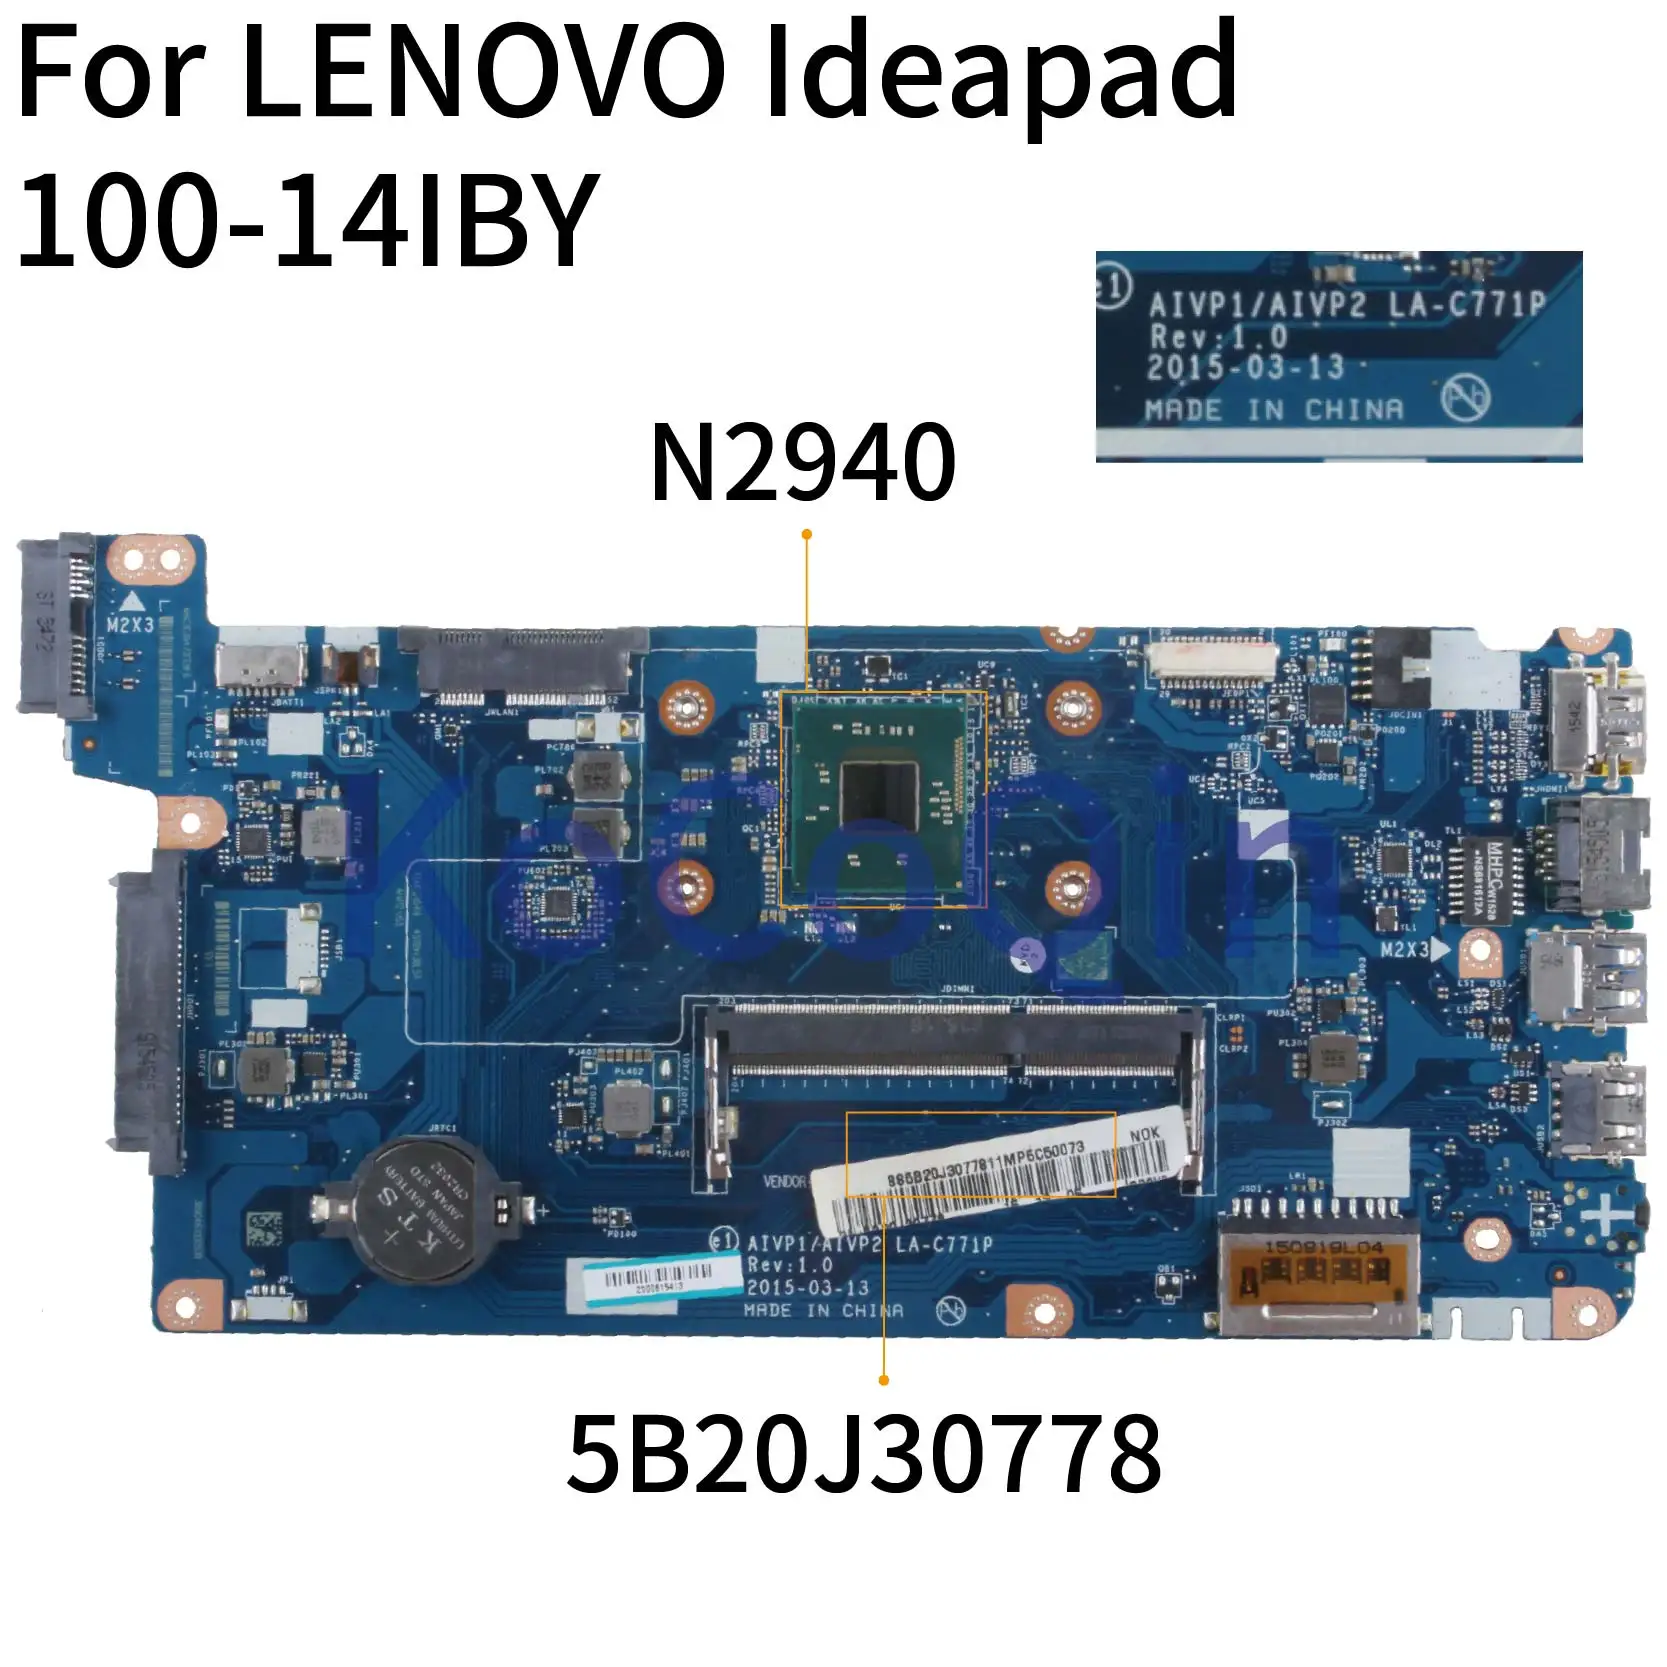 For LENOVO Ideapad 100-14IBY N2840 N2940 14' inch Notebook Mainboard AIVP1/AIVP2 LA-C771P Laptop Motherboard | Компьютеры и офис